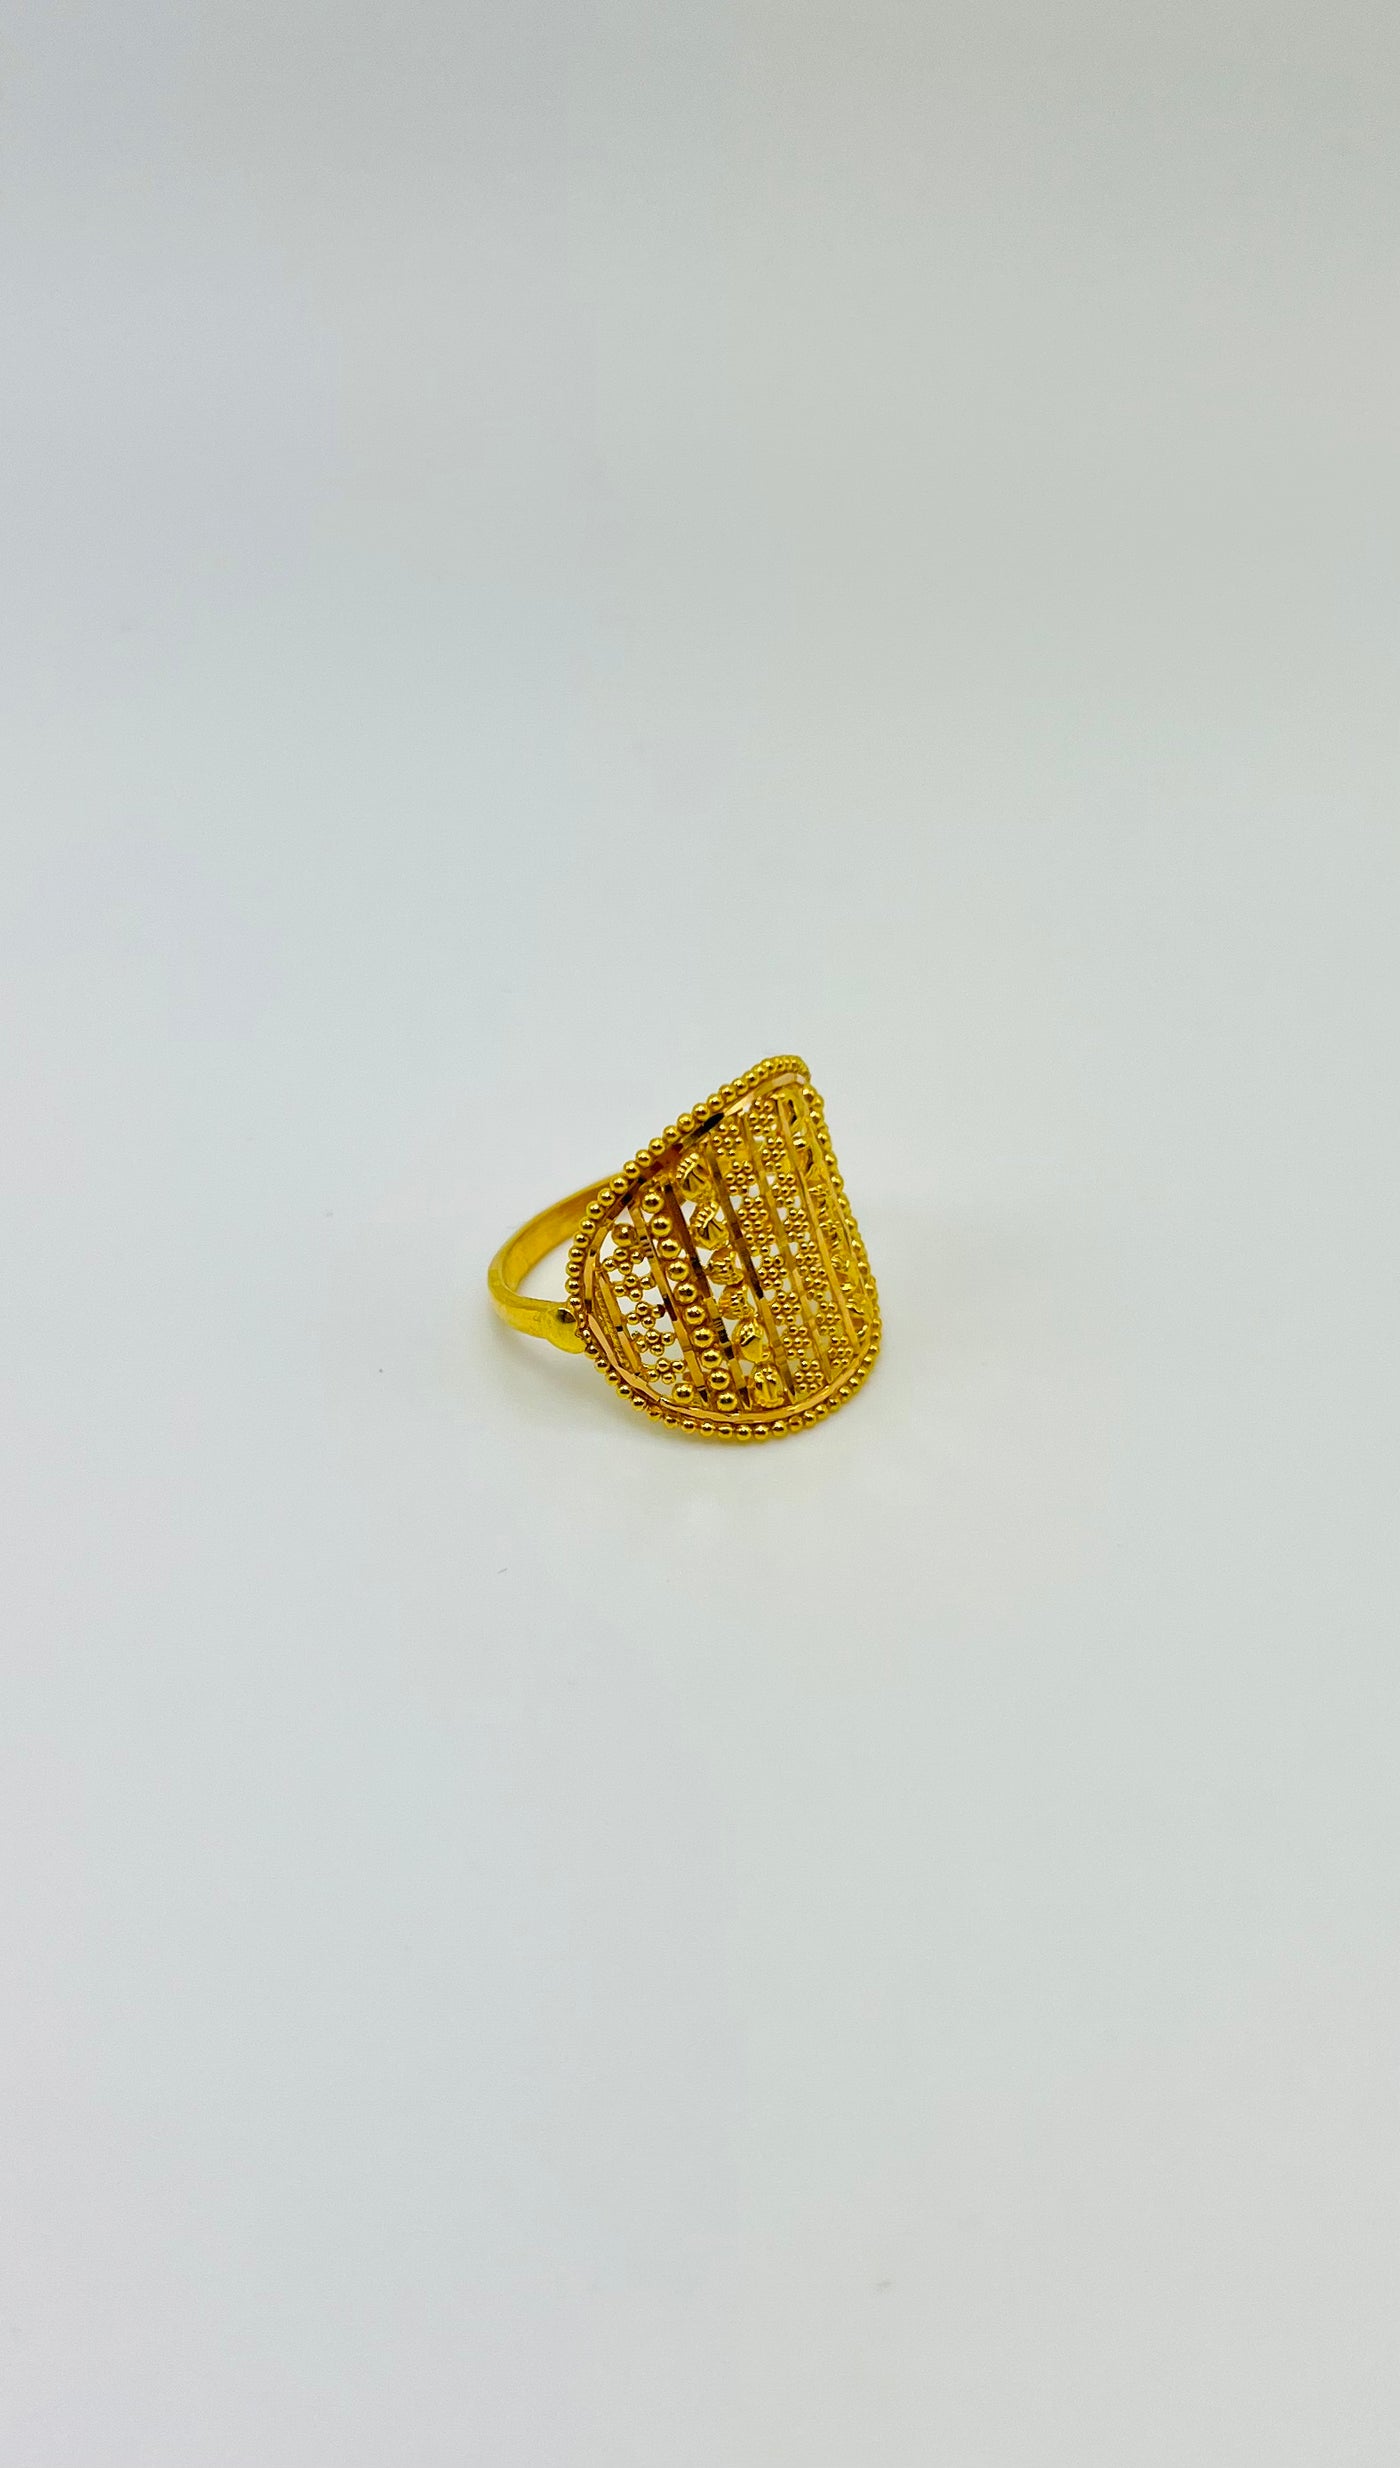 22k Gold Ring